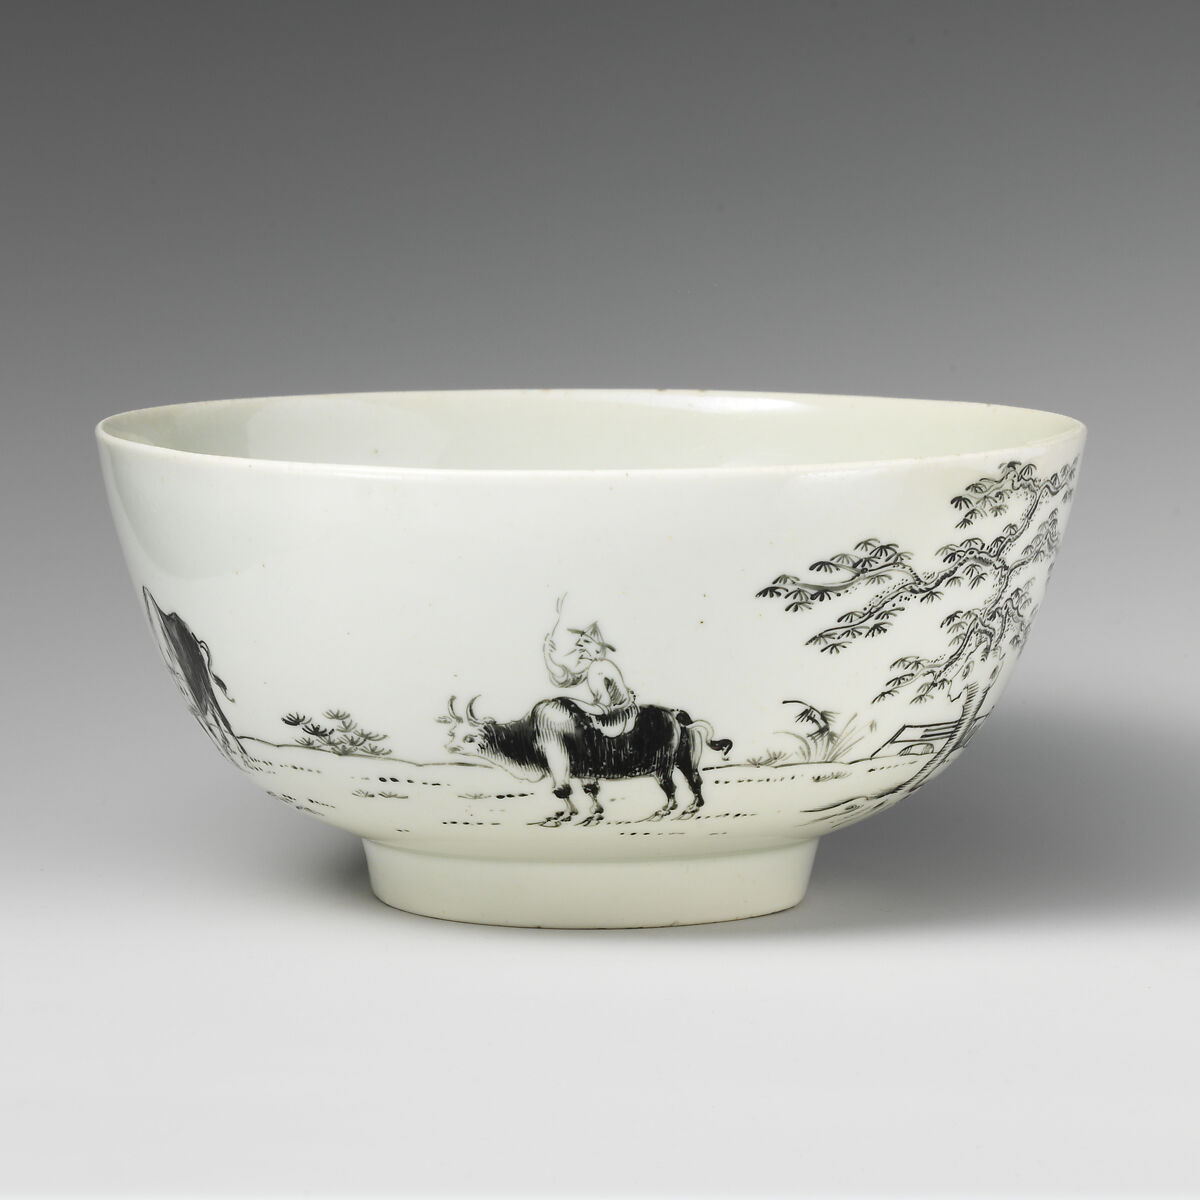 Bowl, Soft-paste porcelain, British 